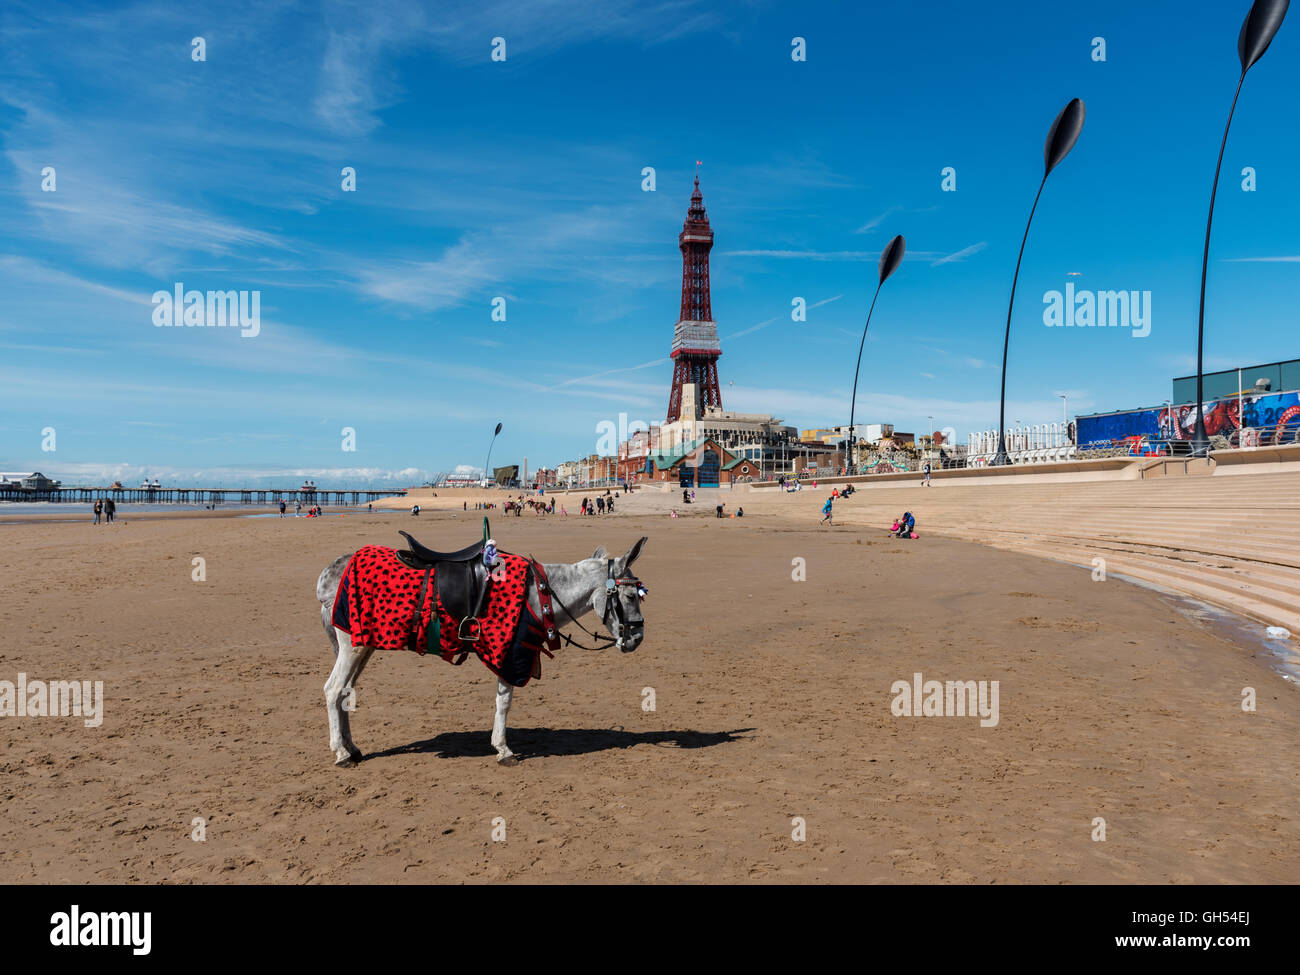 Donkey ride on the beach at Blackpool, England Stock Photo